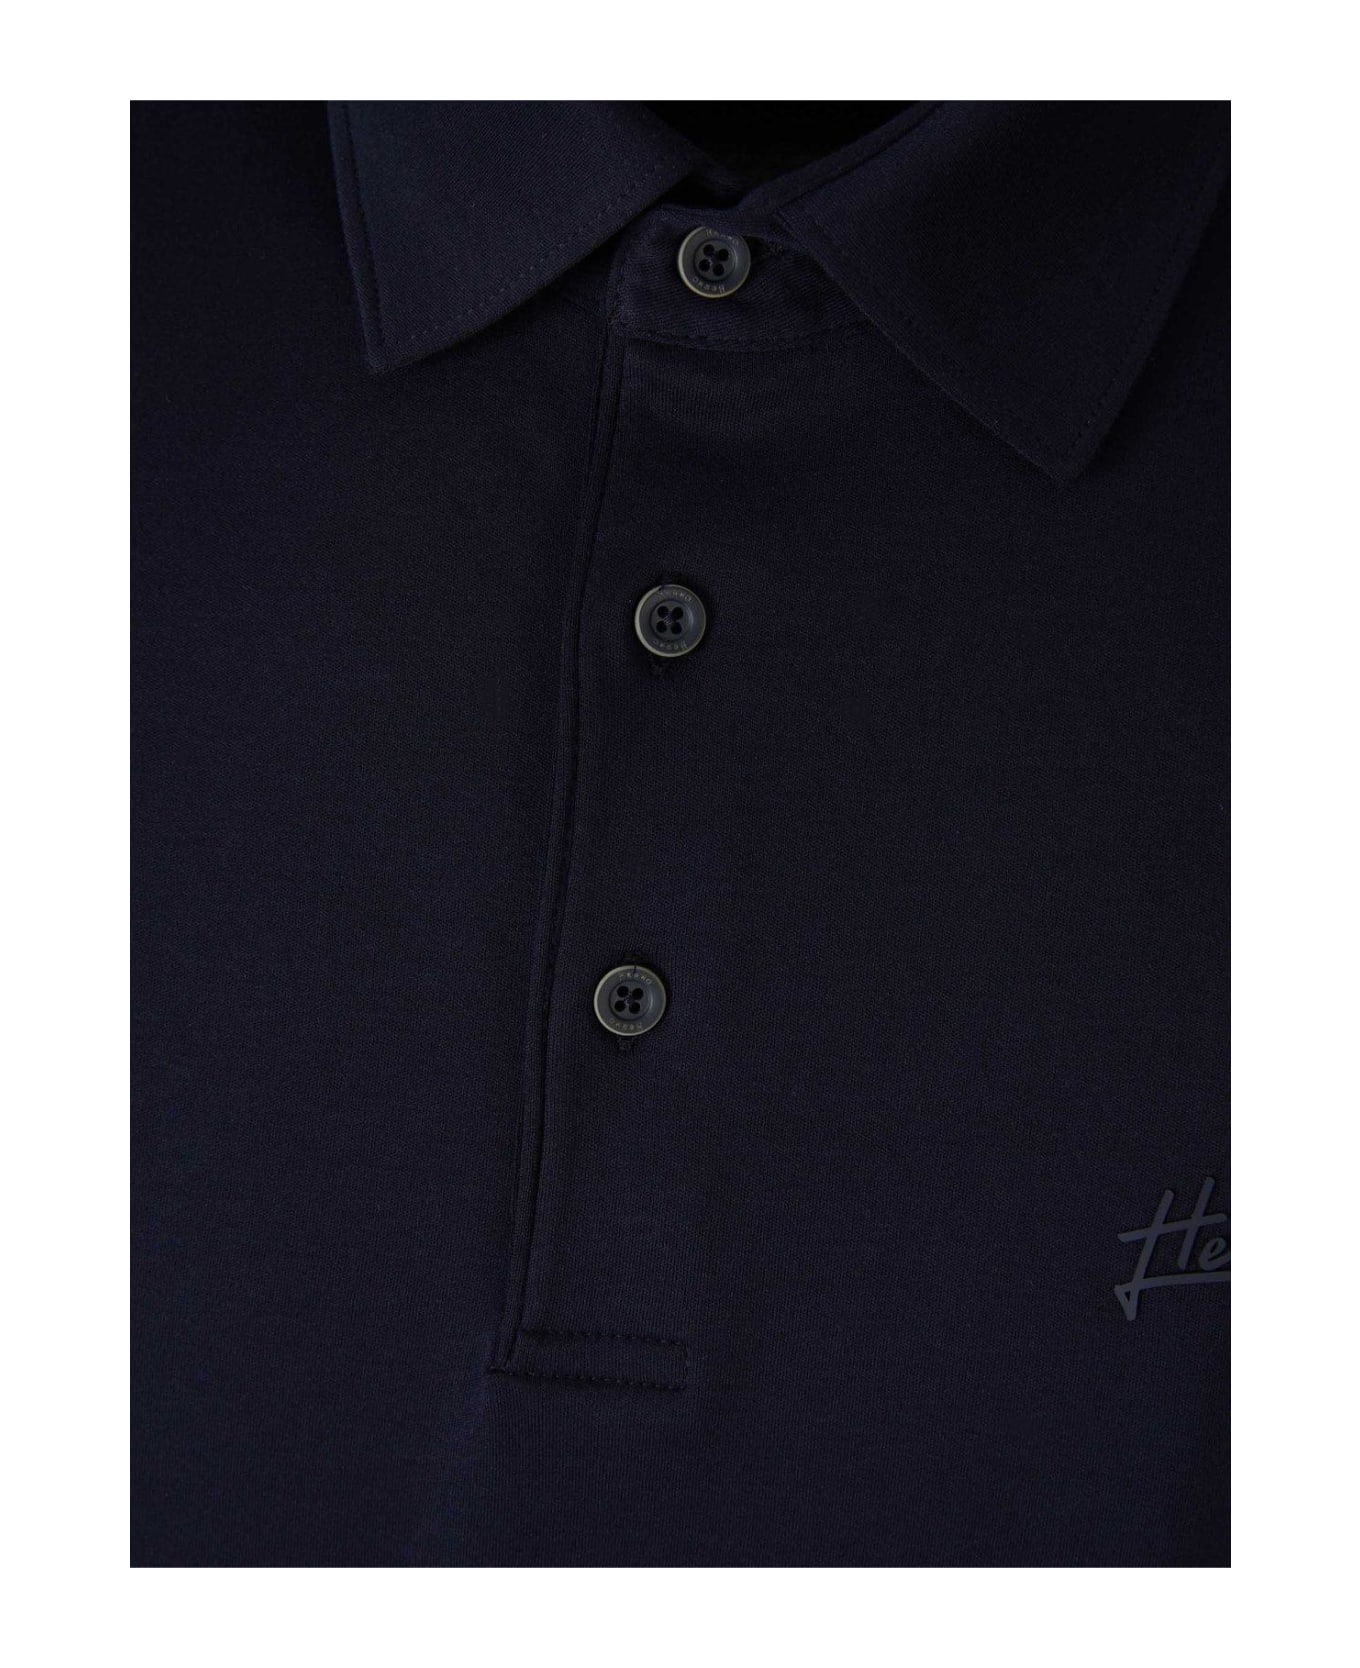 Herno Logo Detailed Short Sleeved Polo Shirt - Blu